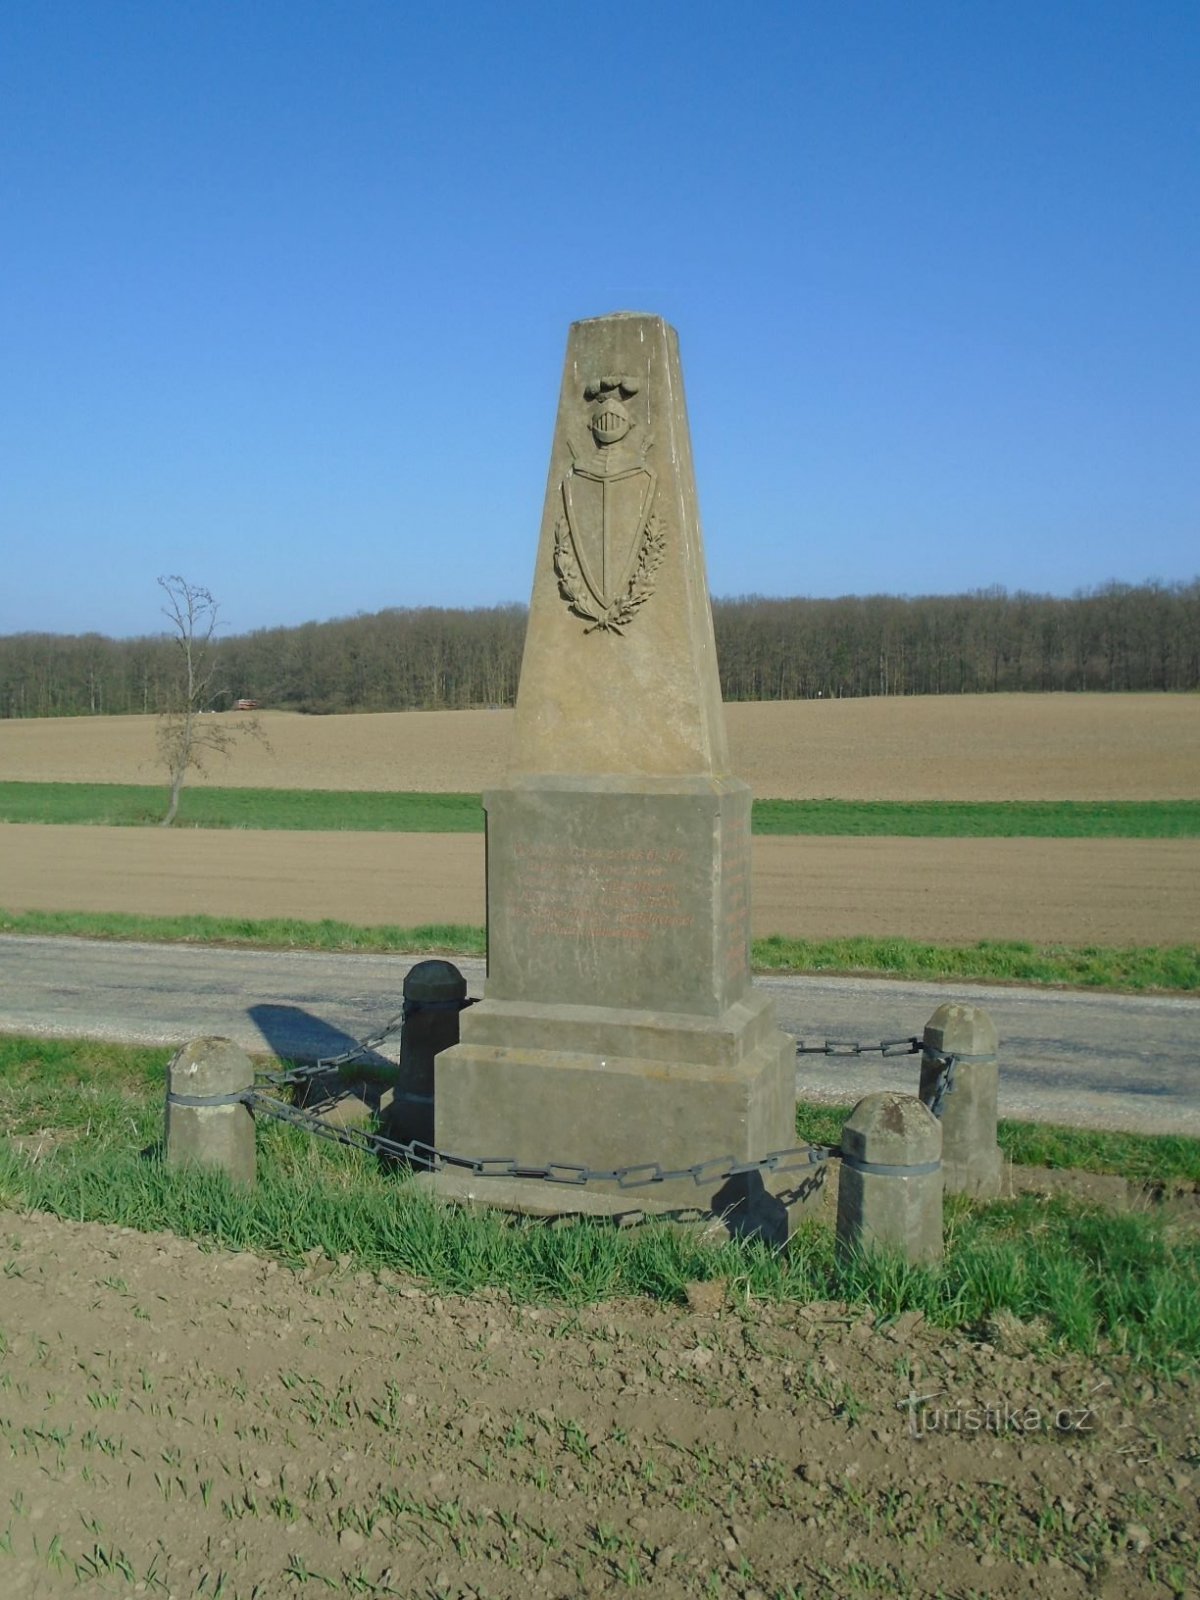 Monument to the Austrian 61st Infantry Regiment by the road (Čistěves, 7.4.2019 April XNUMX)